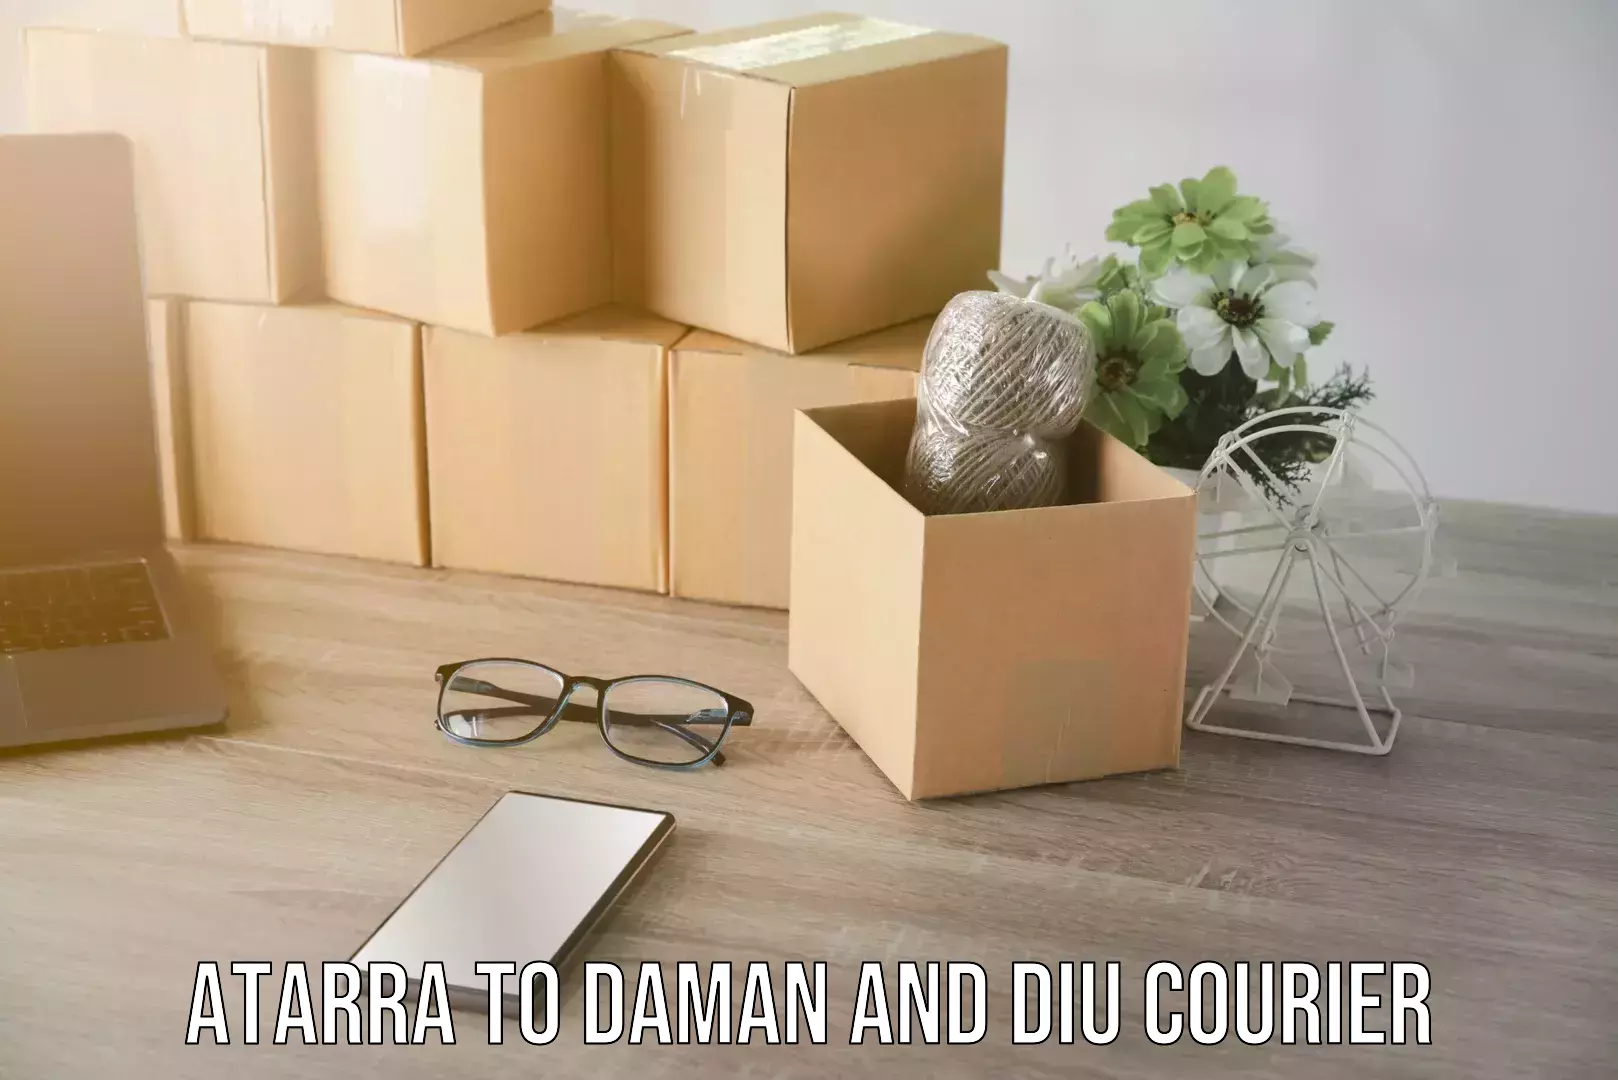 Courier service comparison Atarra to Daman and Diu